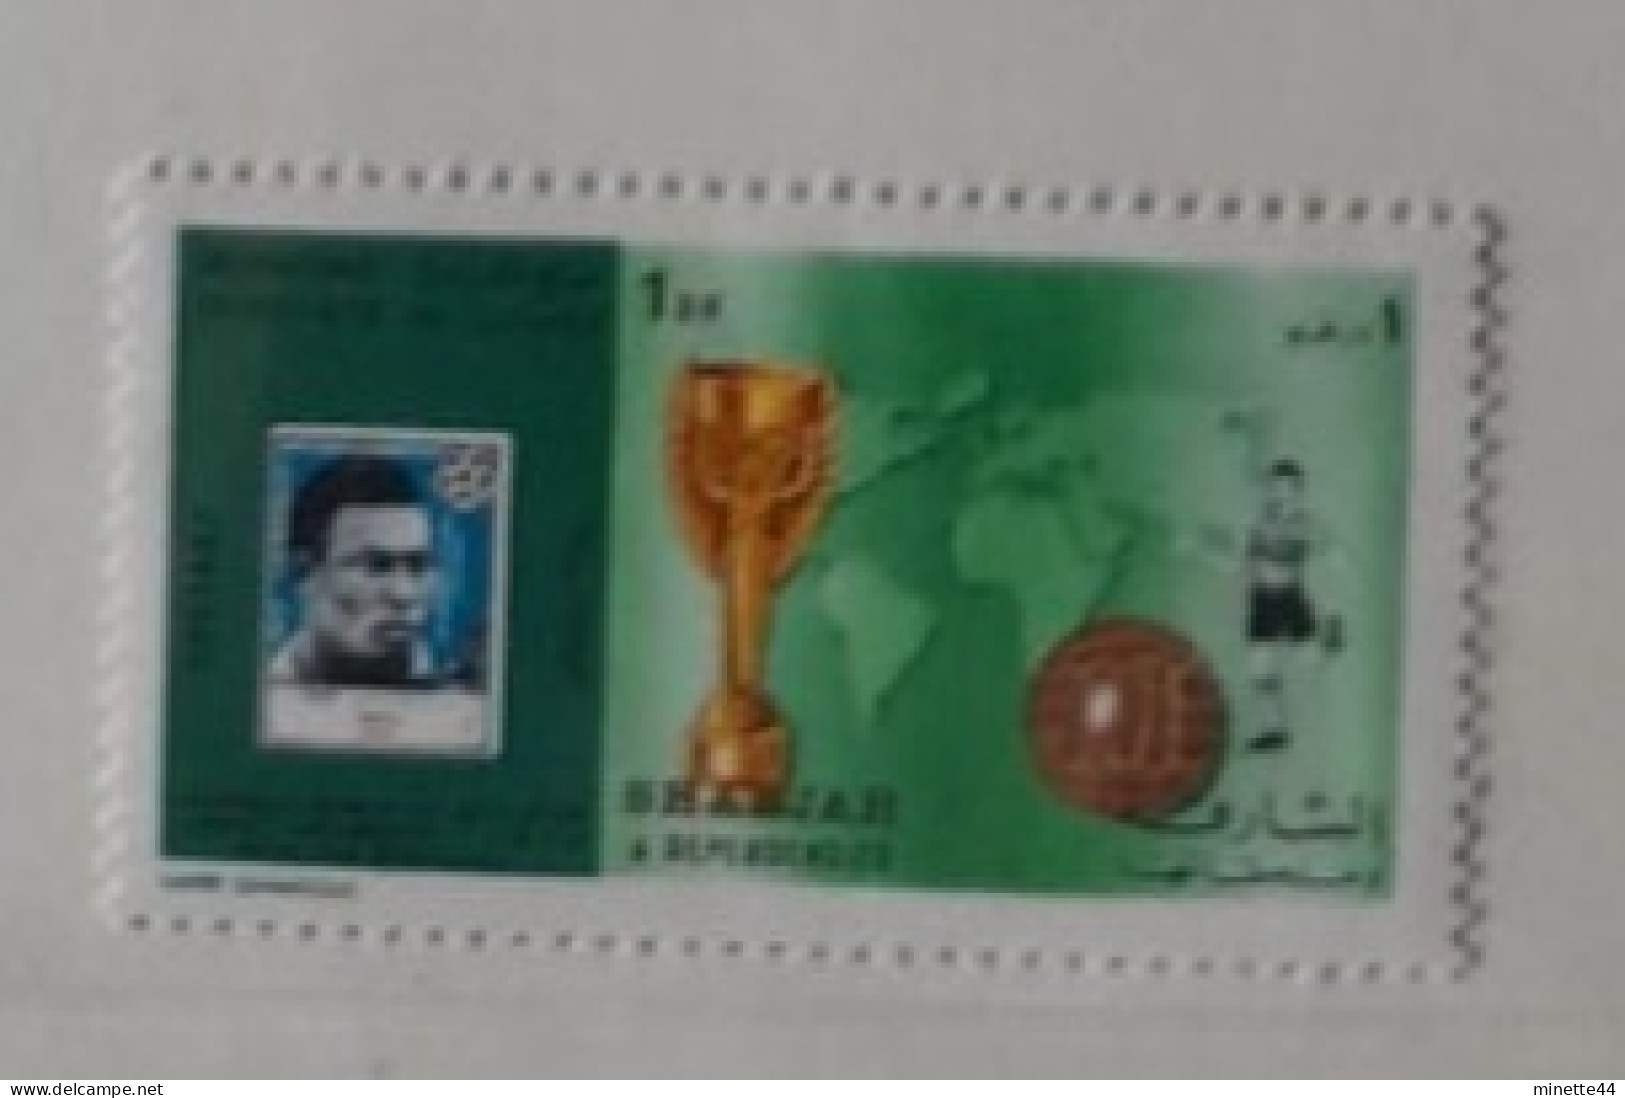 BRESIL BRASIL PELE MNH** SHARJAH  1970  FOOTBALL FUSSBALL SOCCER CALCIO VOETBAL FUTBOL FUTEBOL FOOT FOTBAL - Unused Stamps